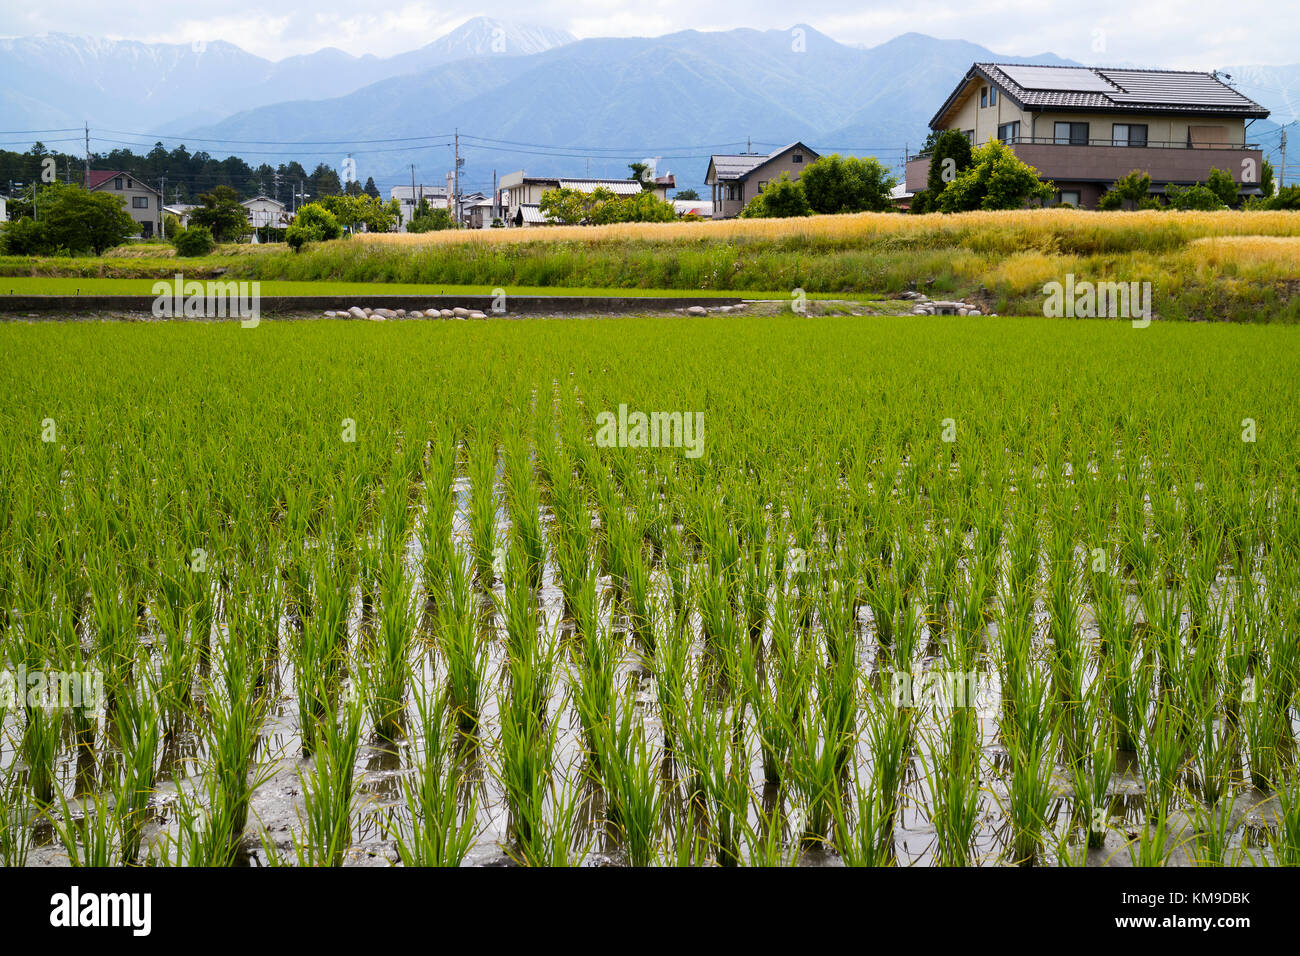 Hokata - Japan, June 6, 2017: Rice field with green young plants in spring, Hotaka, Japan Stock Photo